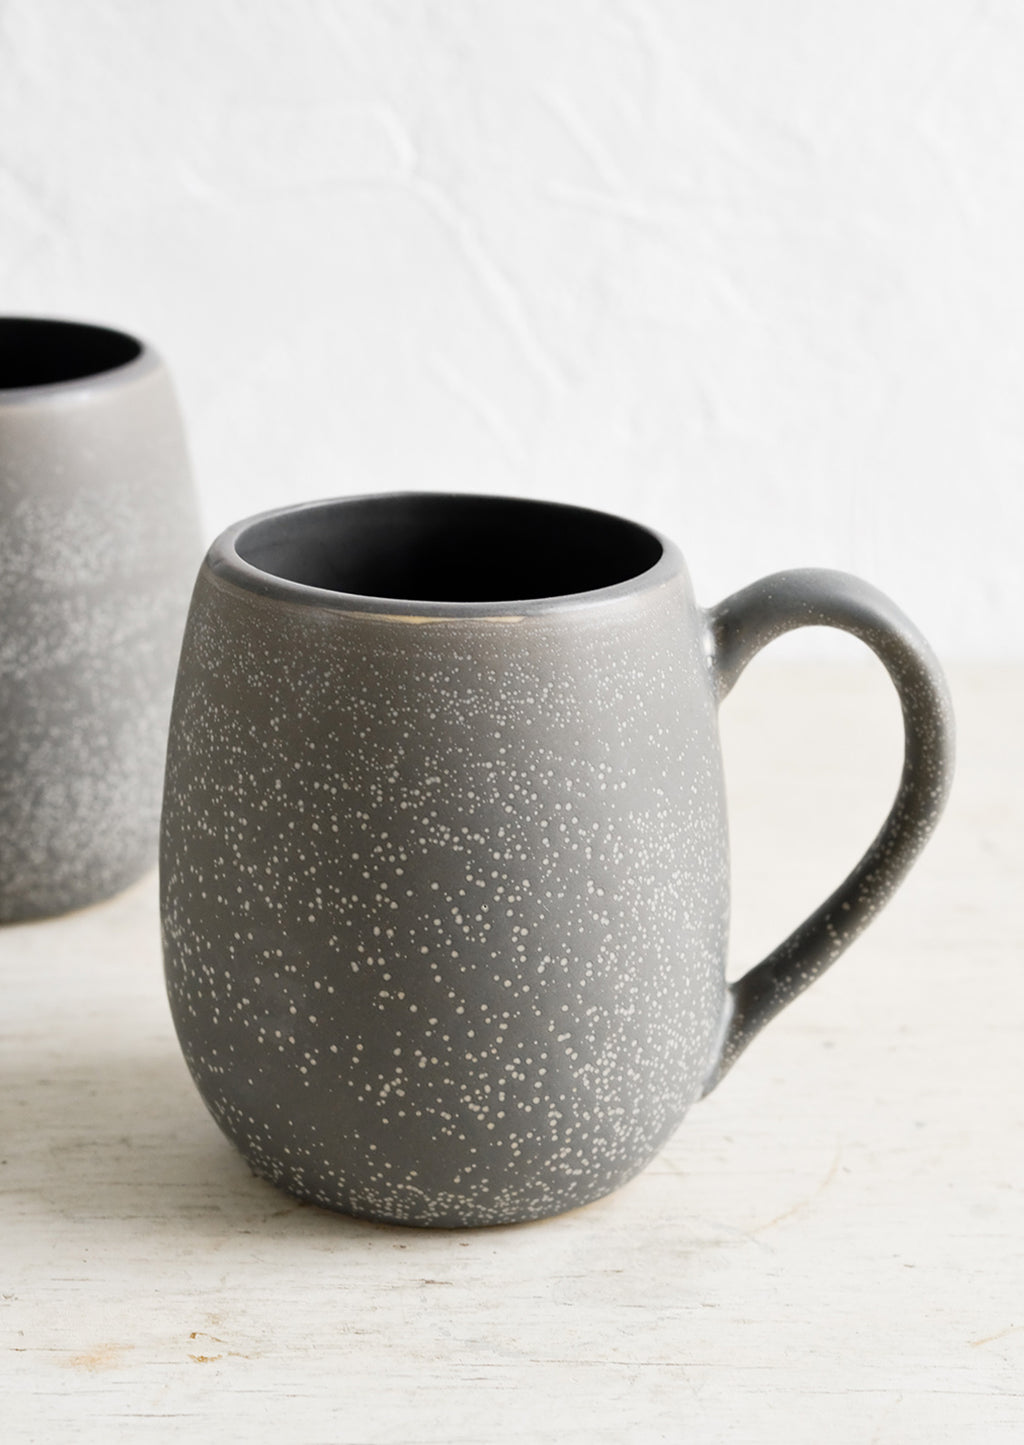 2: A large ceramic mug in dark grey with light speckles.